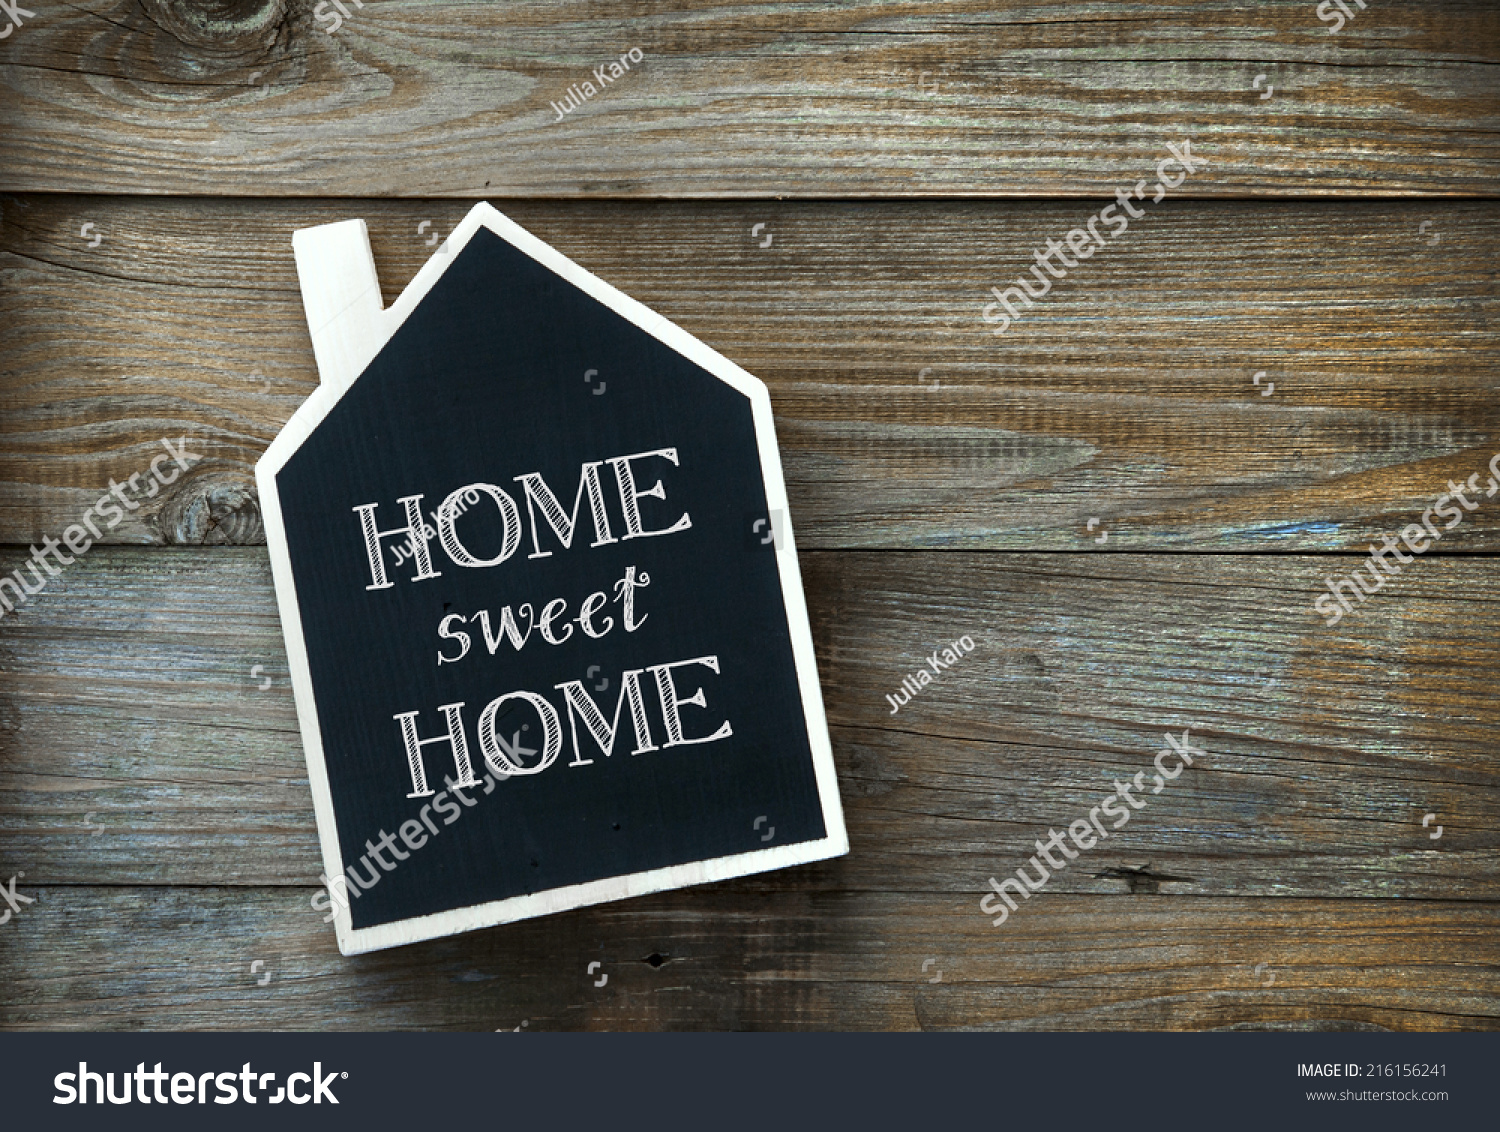 Home Sweet Home performed by Erutan - YouTube